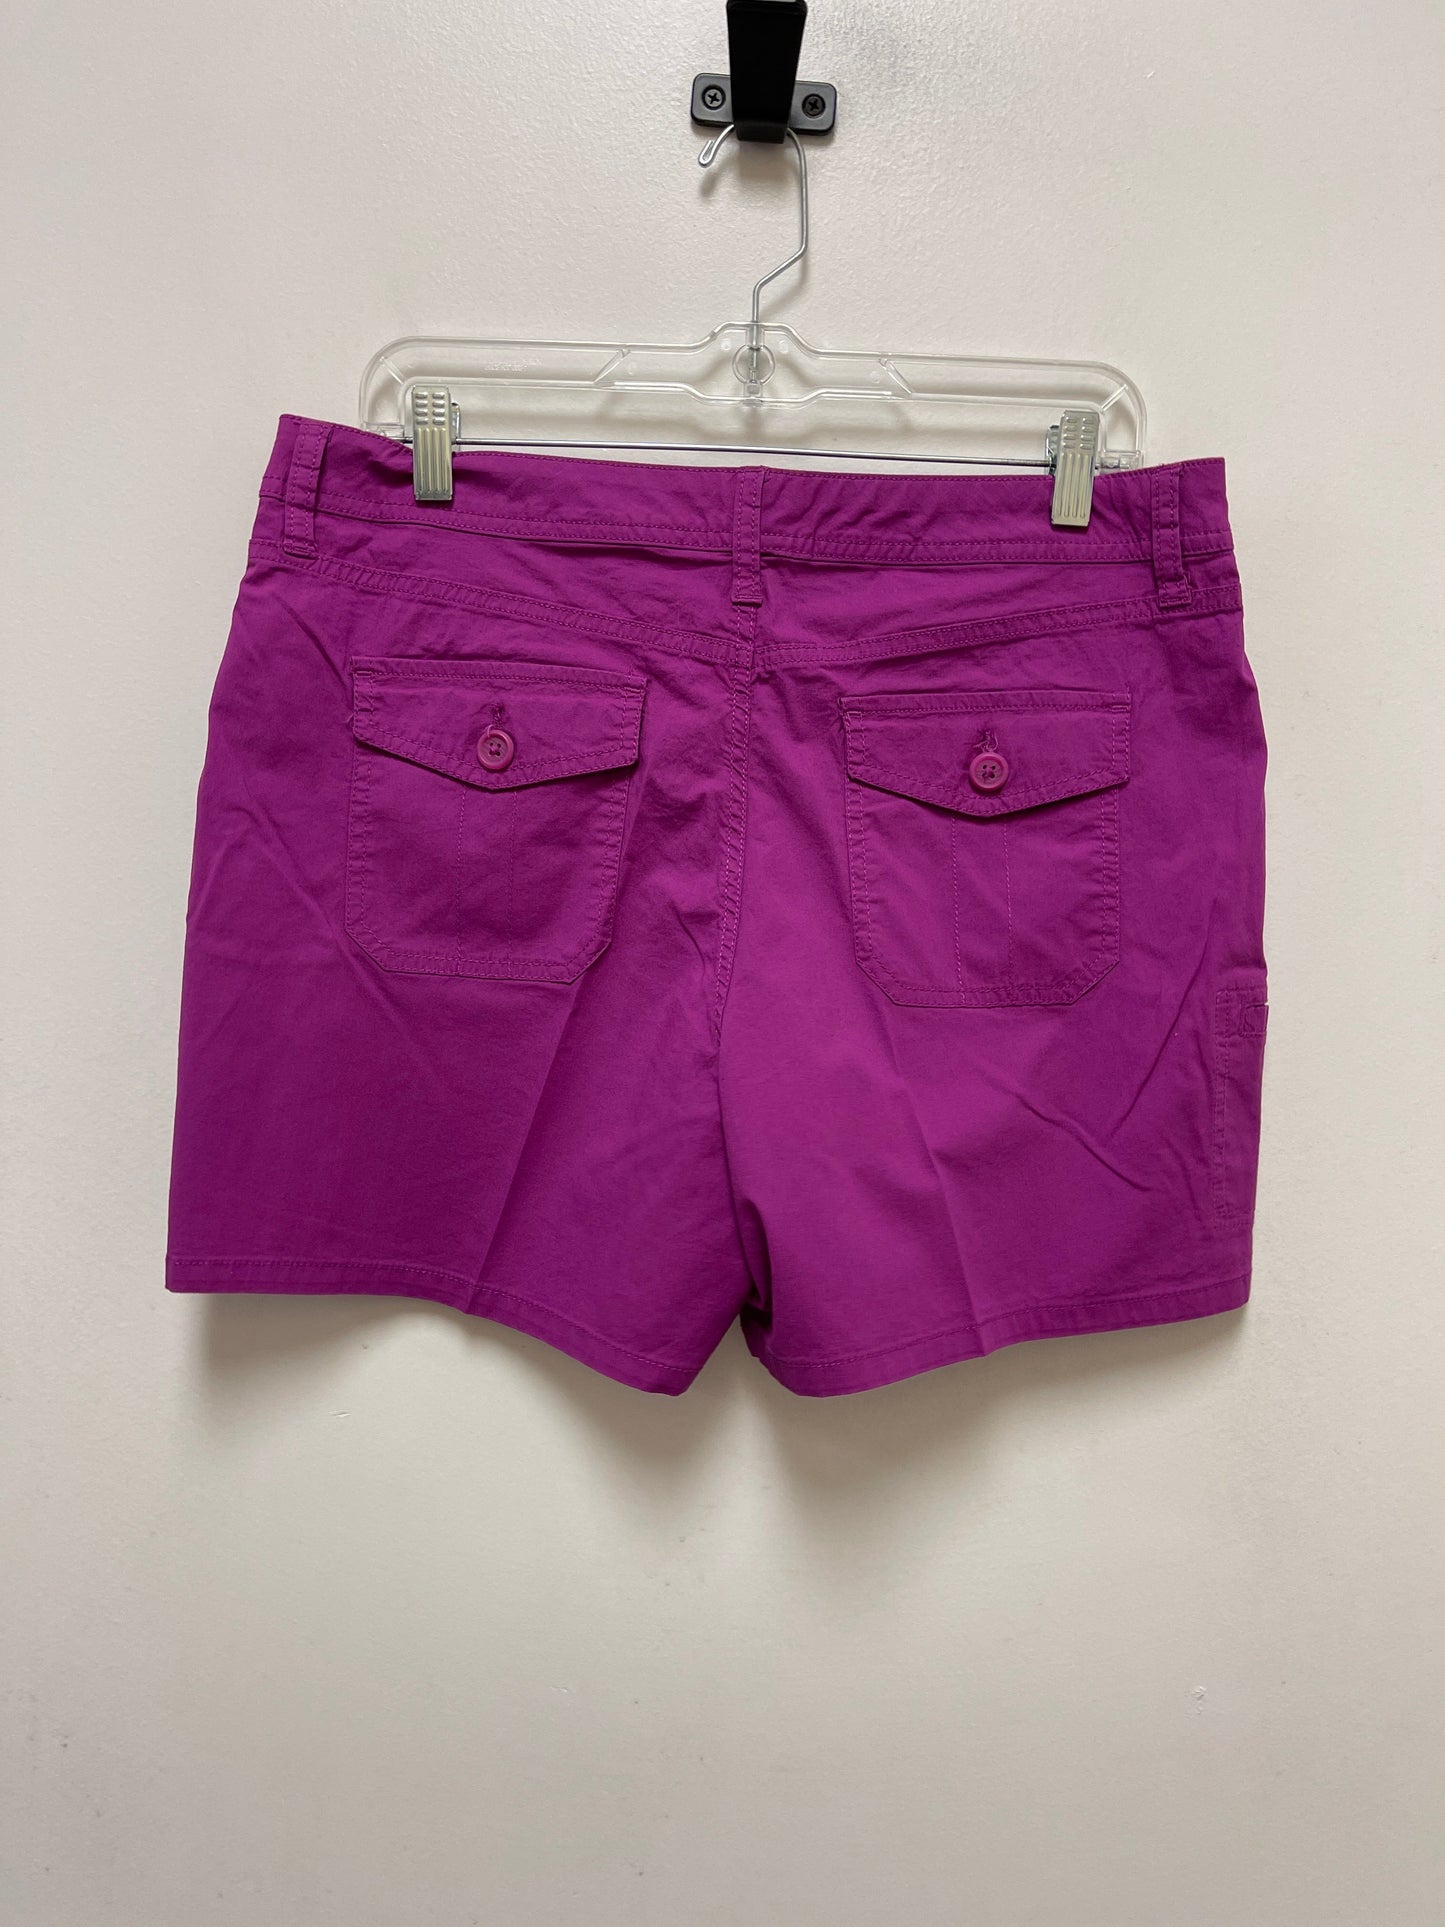 Shorts By St Johns Bay  Size: 10